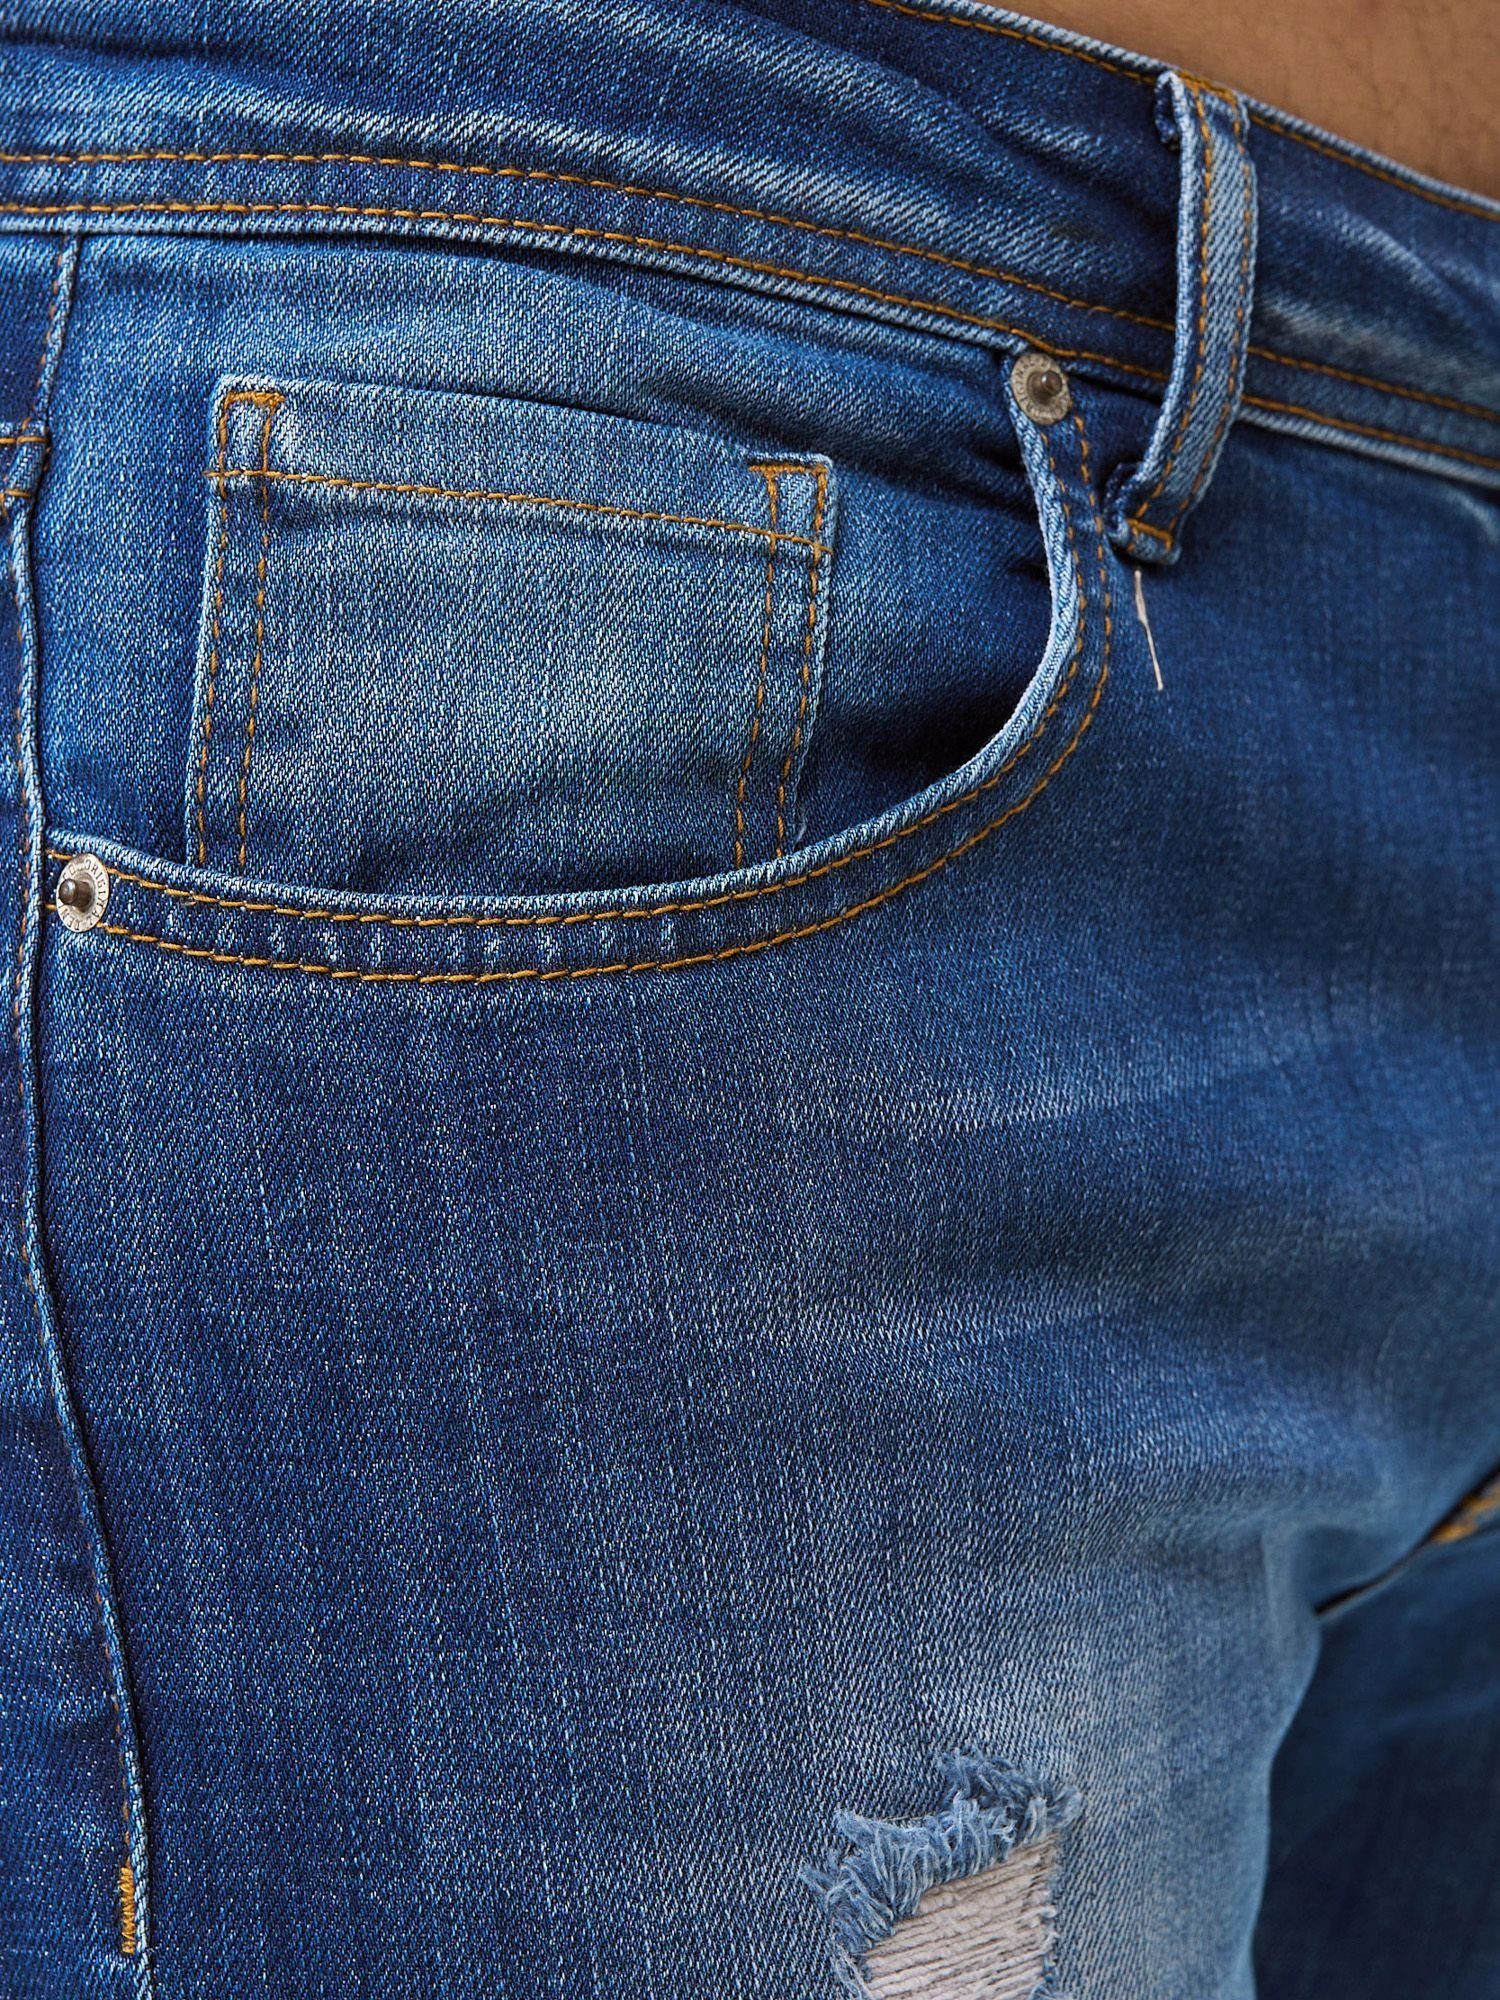 John Kayna Jeanshose Jeans Freizeit,Casual Herrenhose Designer (Jeanshose Blau 1-tlg) Slim Slim-fit-Jeans Designerjeans Fit Bootcut, Herren Herrenjeans Denim J-710-JK